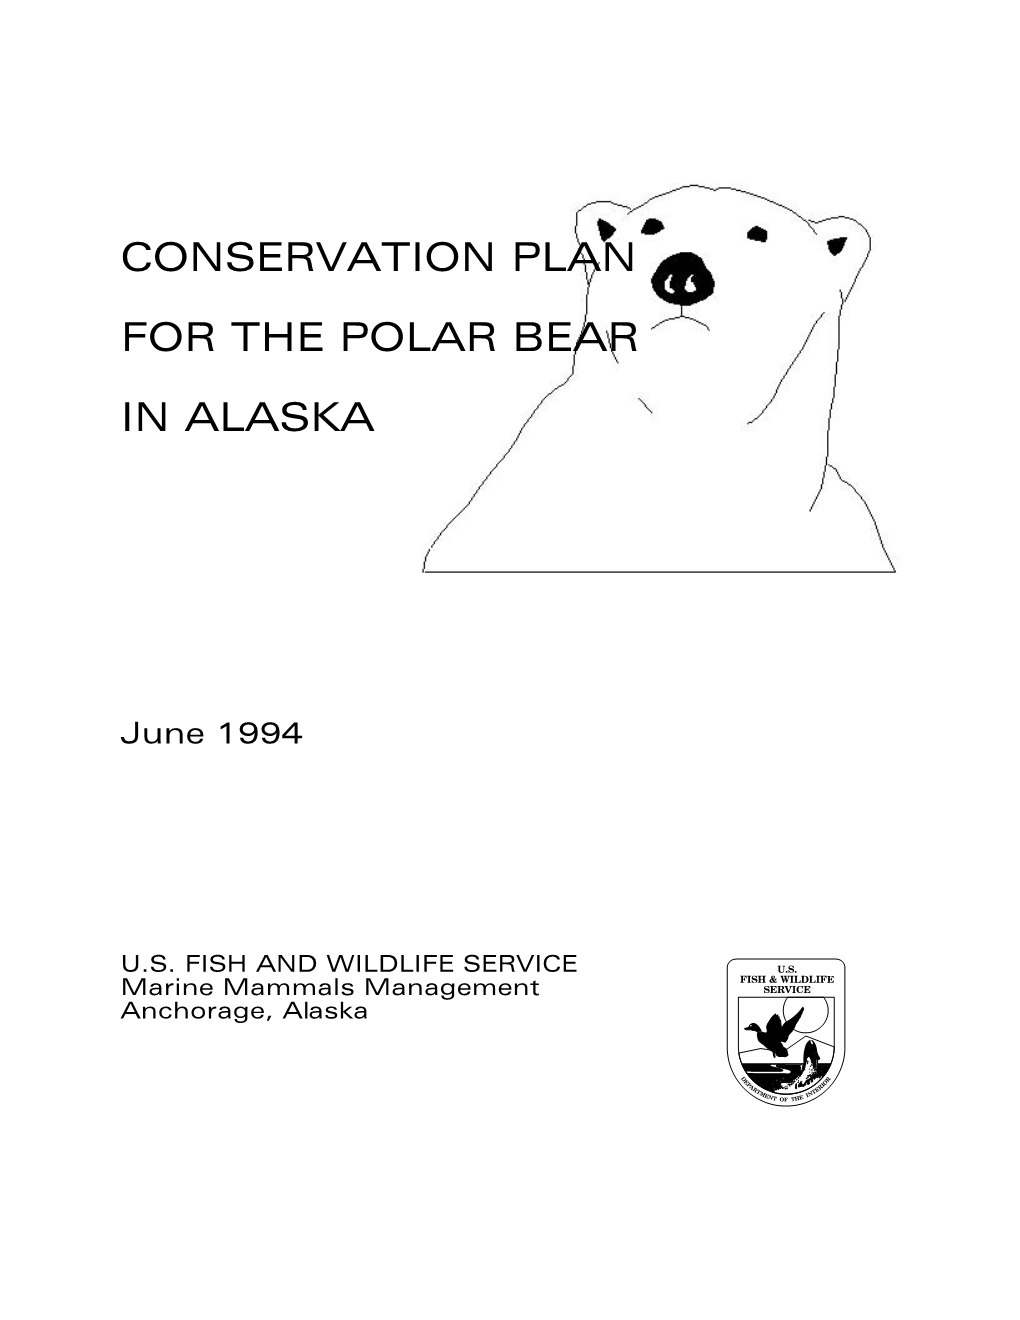 Conservation Plan for the Polar Bear in Alaska